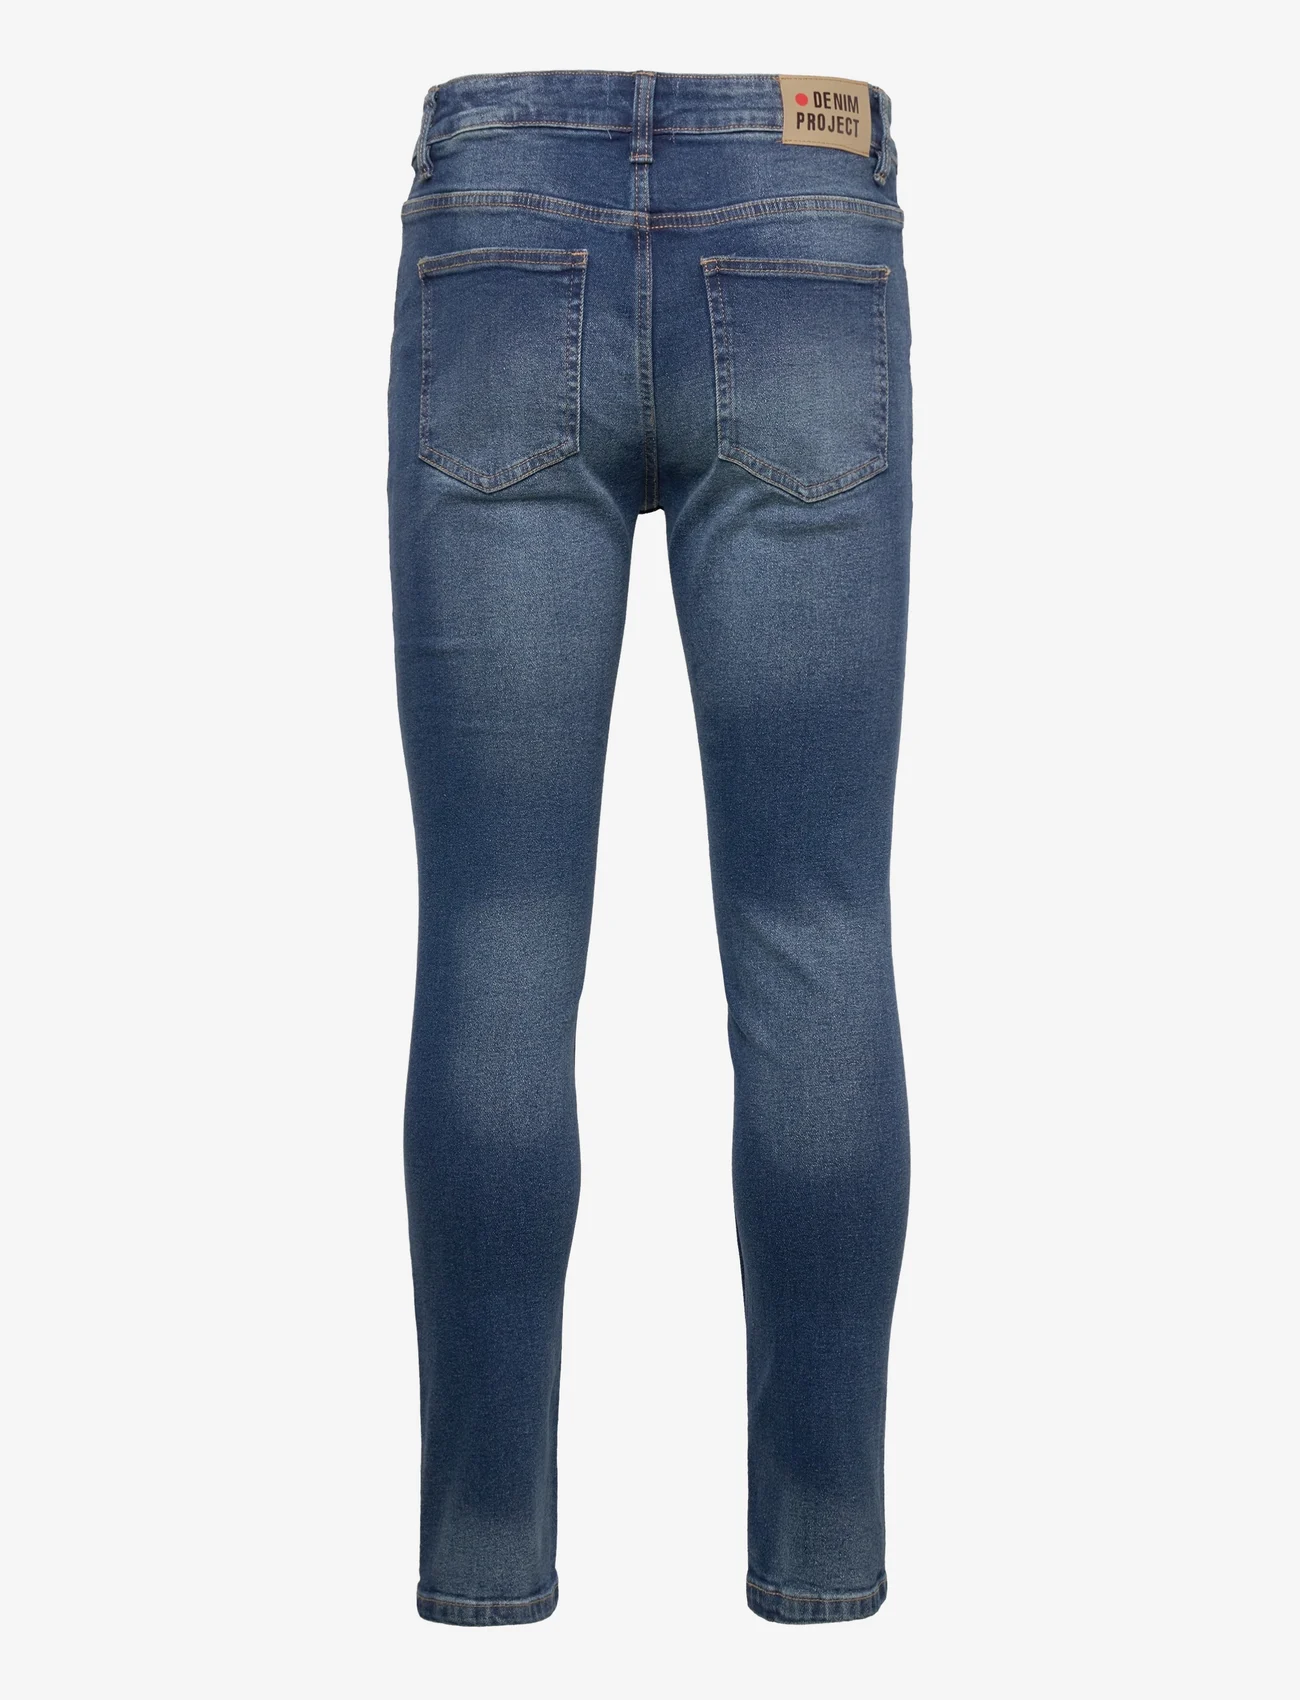 Denim project - Mr. Red - slim jeans - dark blue - 1